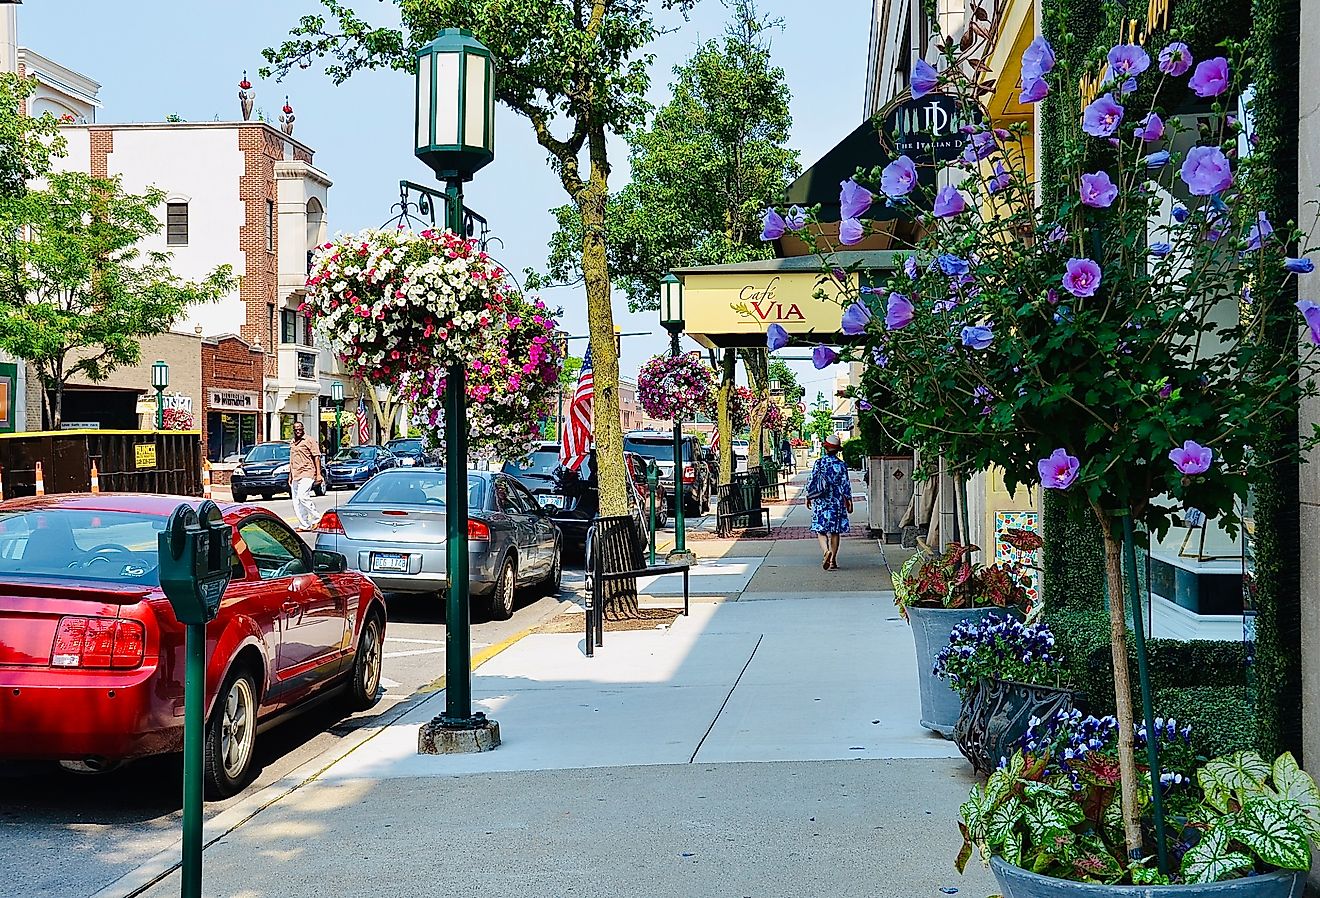 Downtown street in Birmingham, Michigan. Image credit PQK via Shutterstock